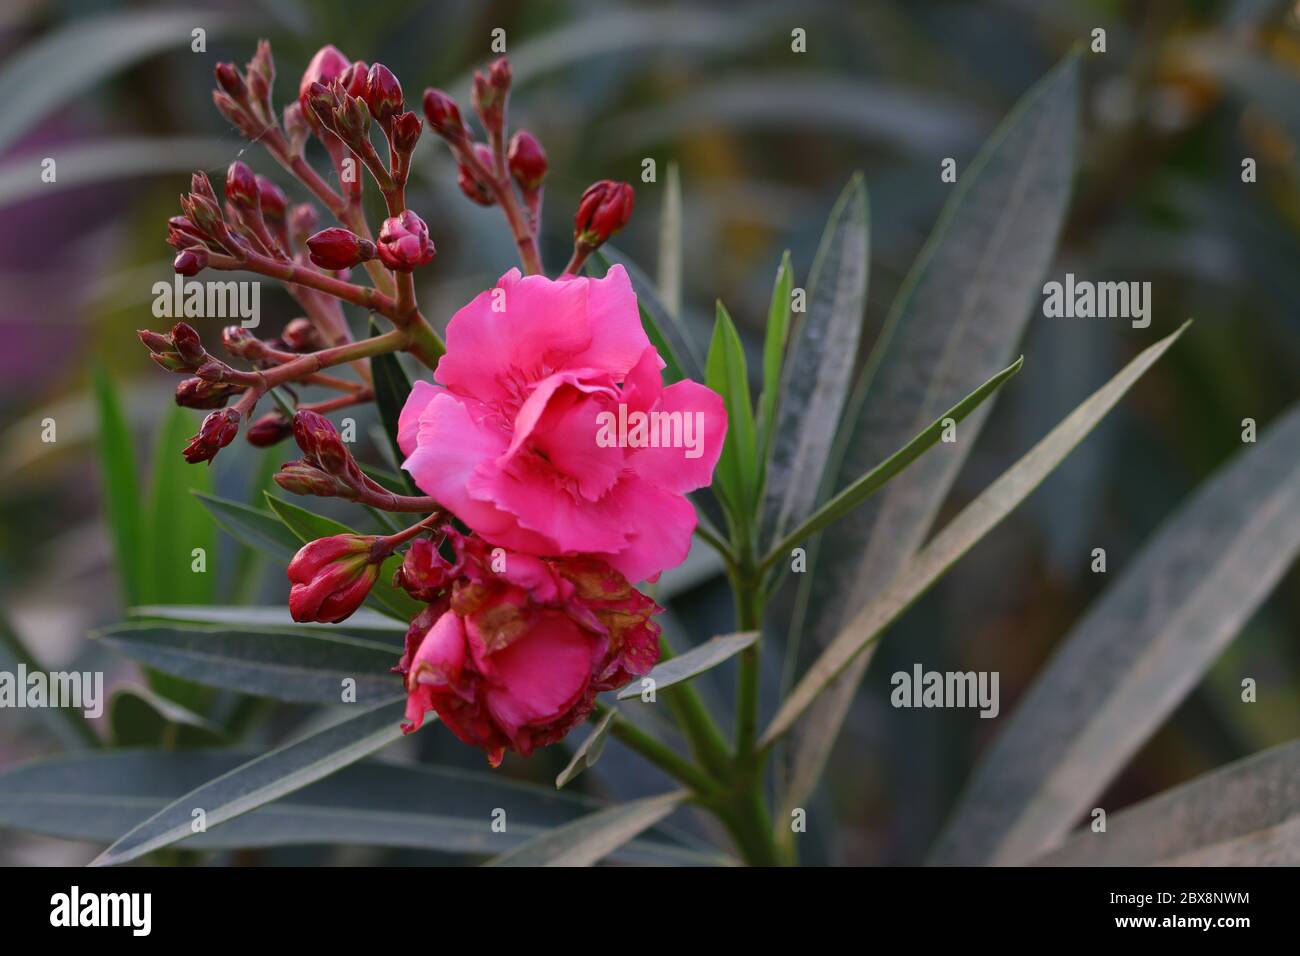 Rosa Oleander Blume hd-Fotografie, kostenlose Oleander Blume Foto Stockfoto